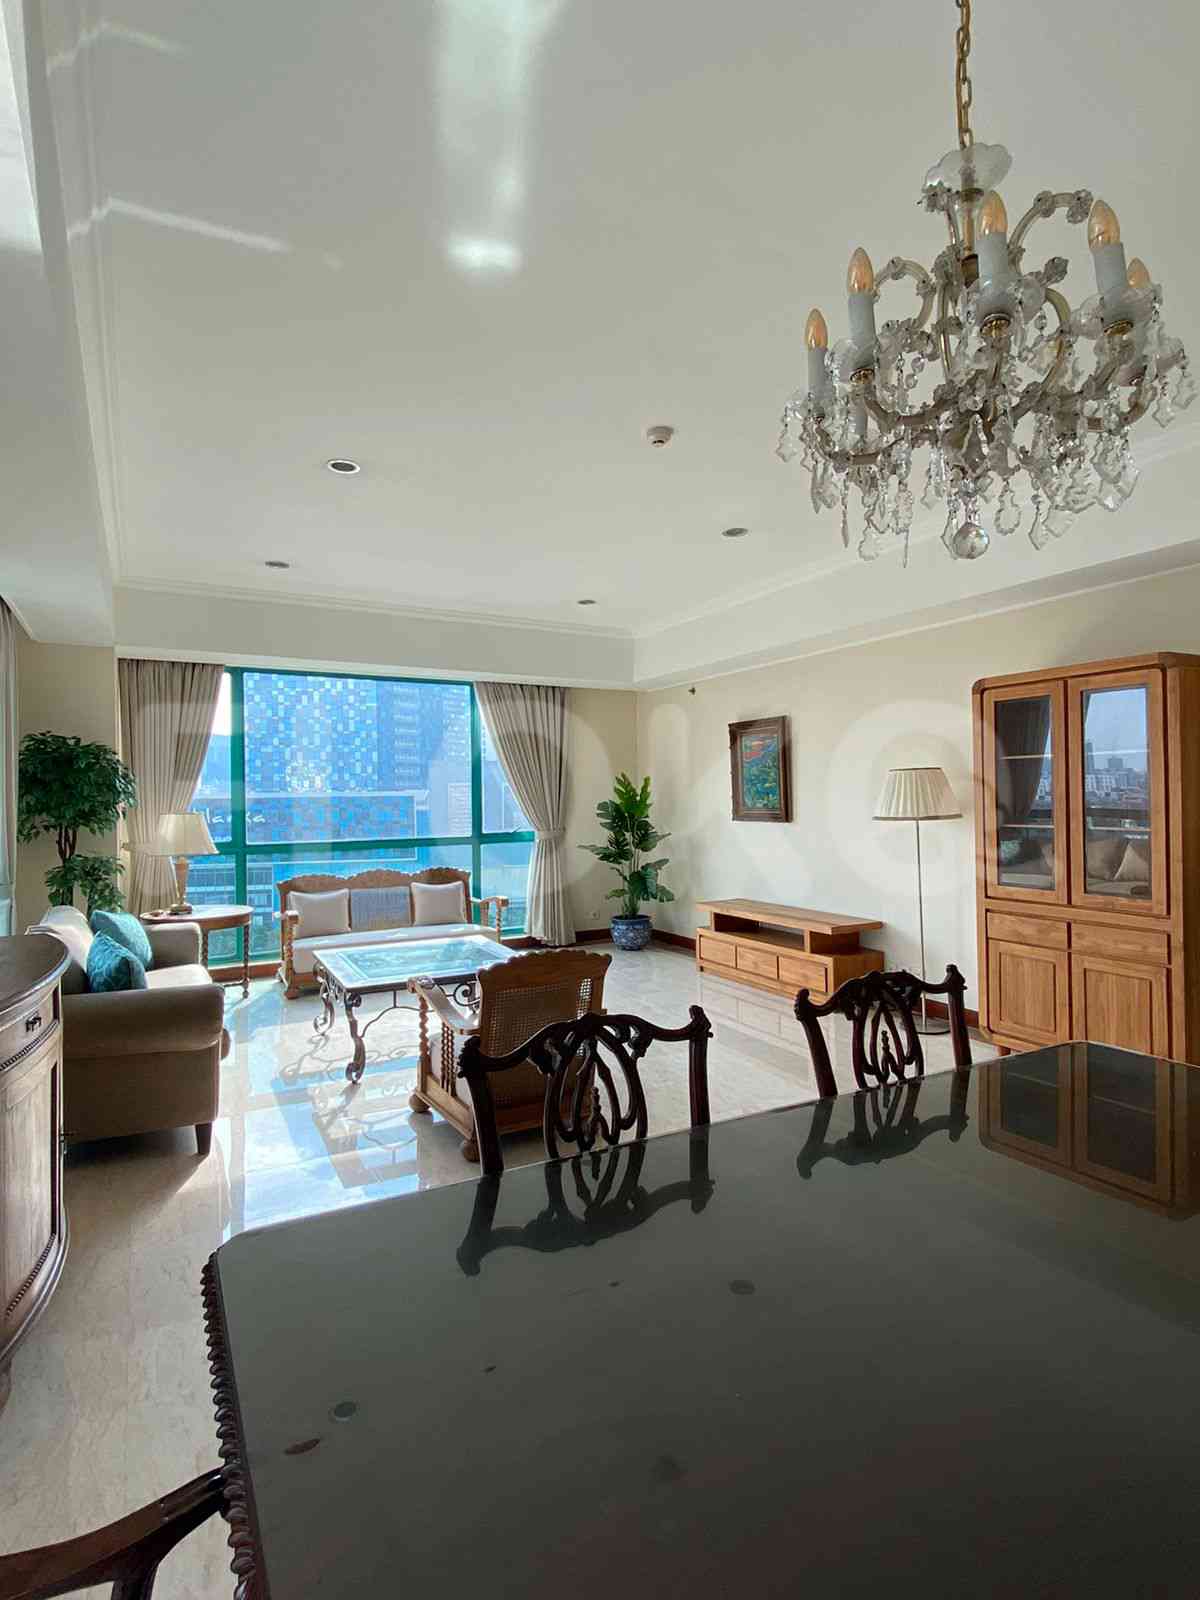 3 Bedroom on 10th Floor for Rent in Casablanca Apartment - fte130 8